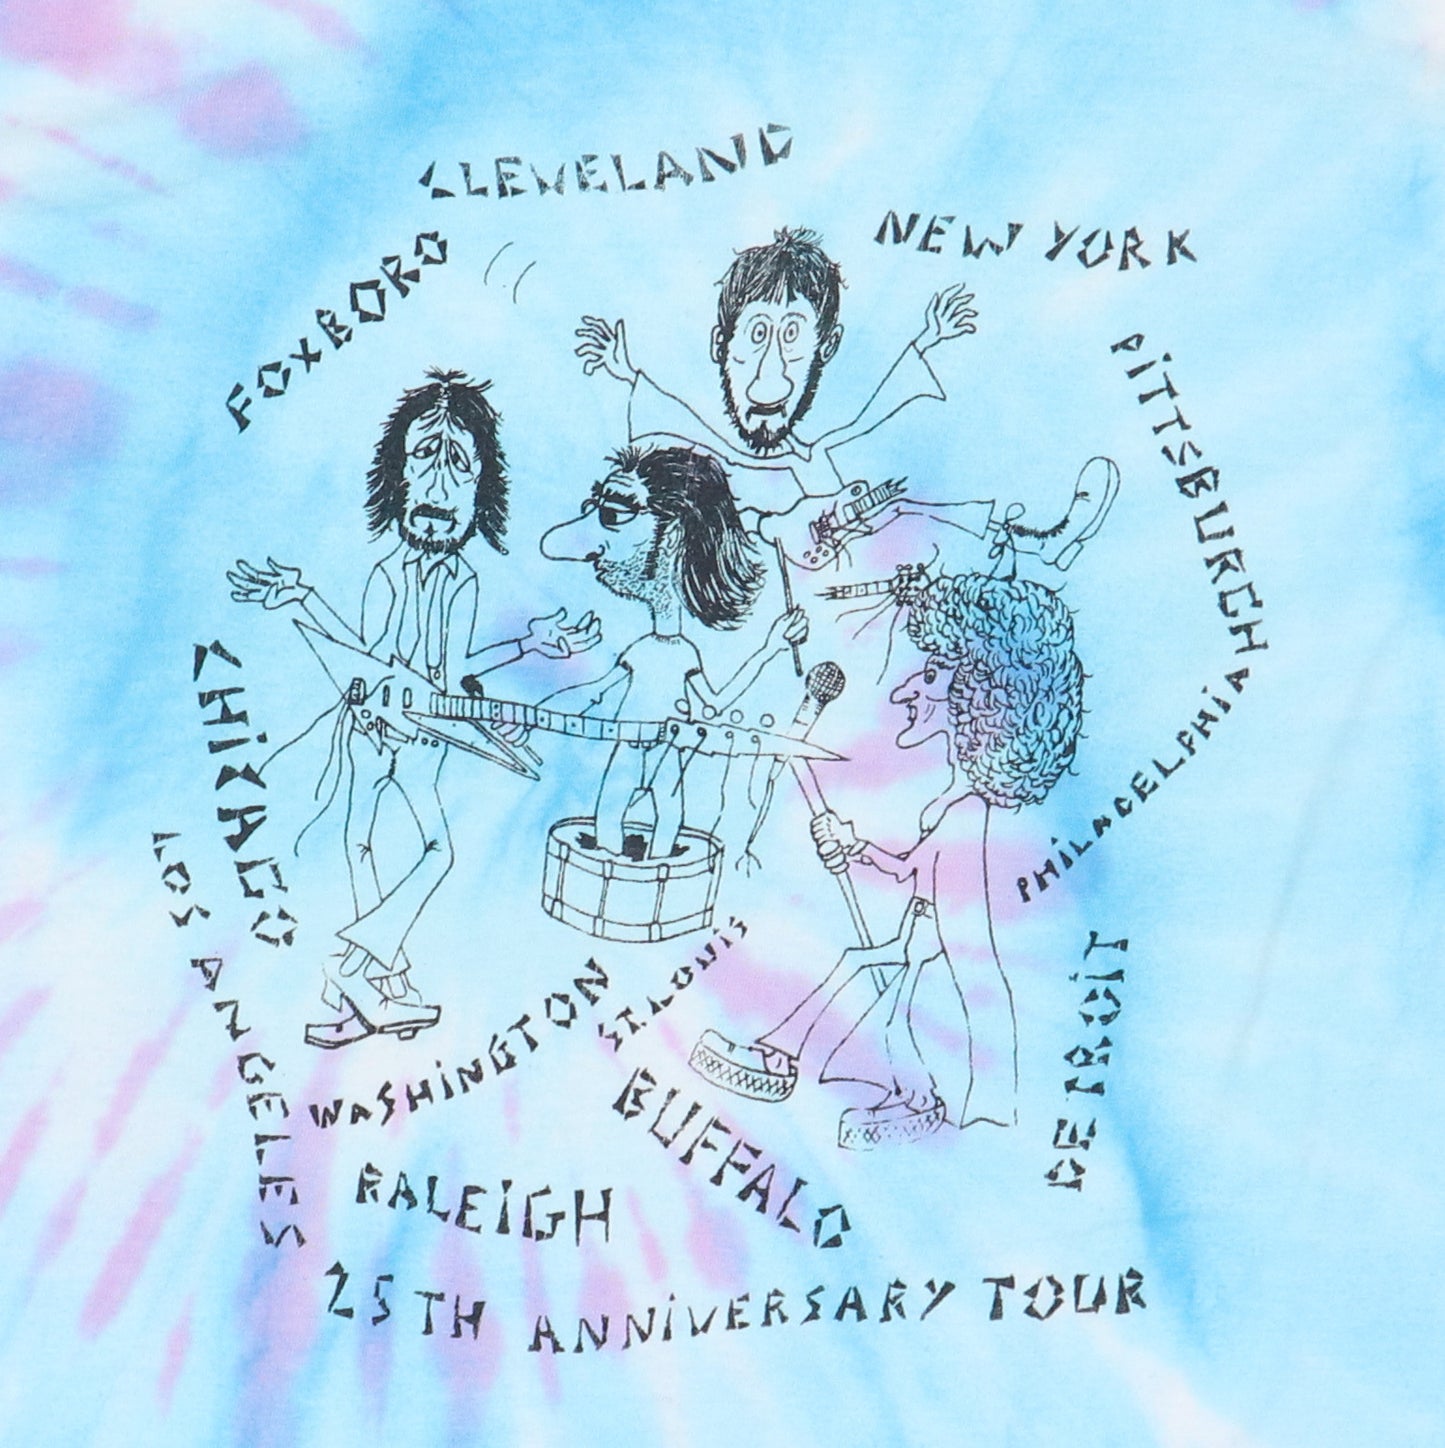 1989 The Who Tie Dye Tour Shirt